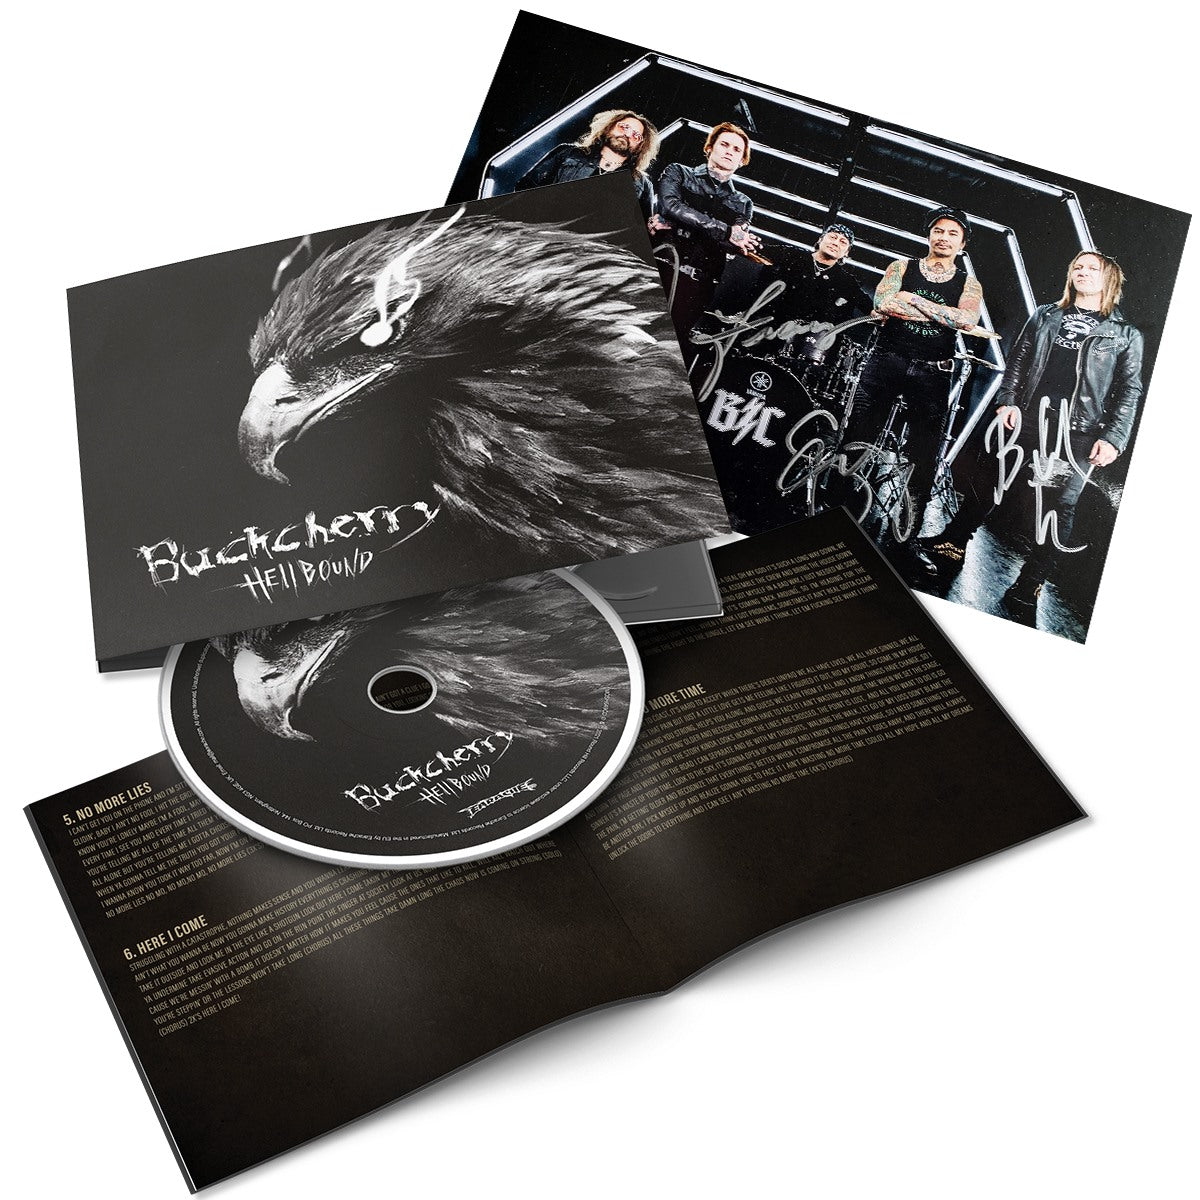 Buckcherry "Hellbound" SIGNED Digipak CD